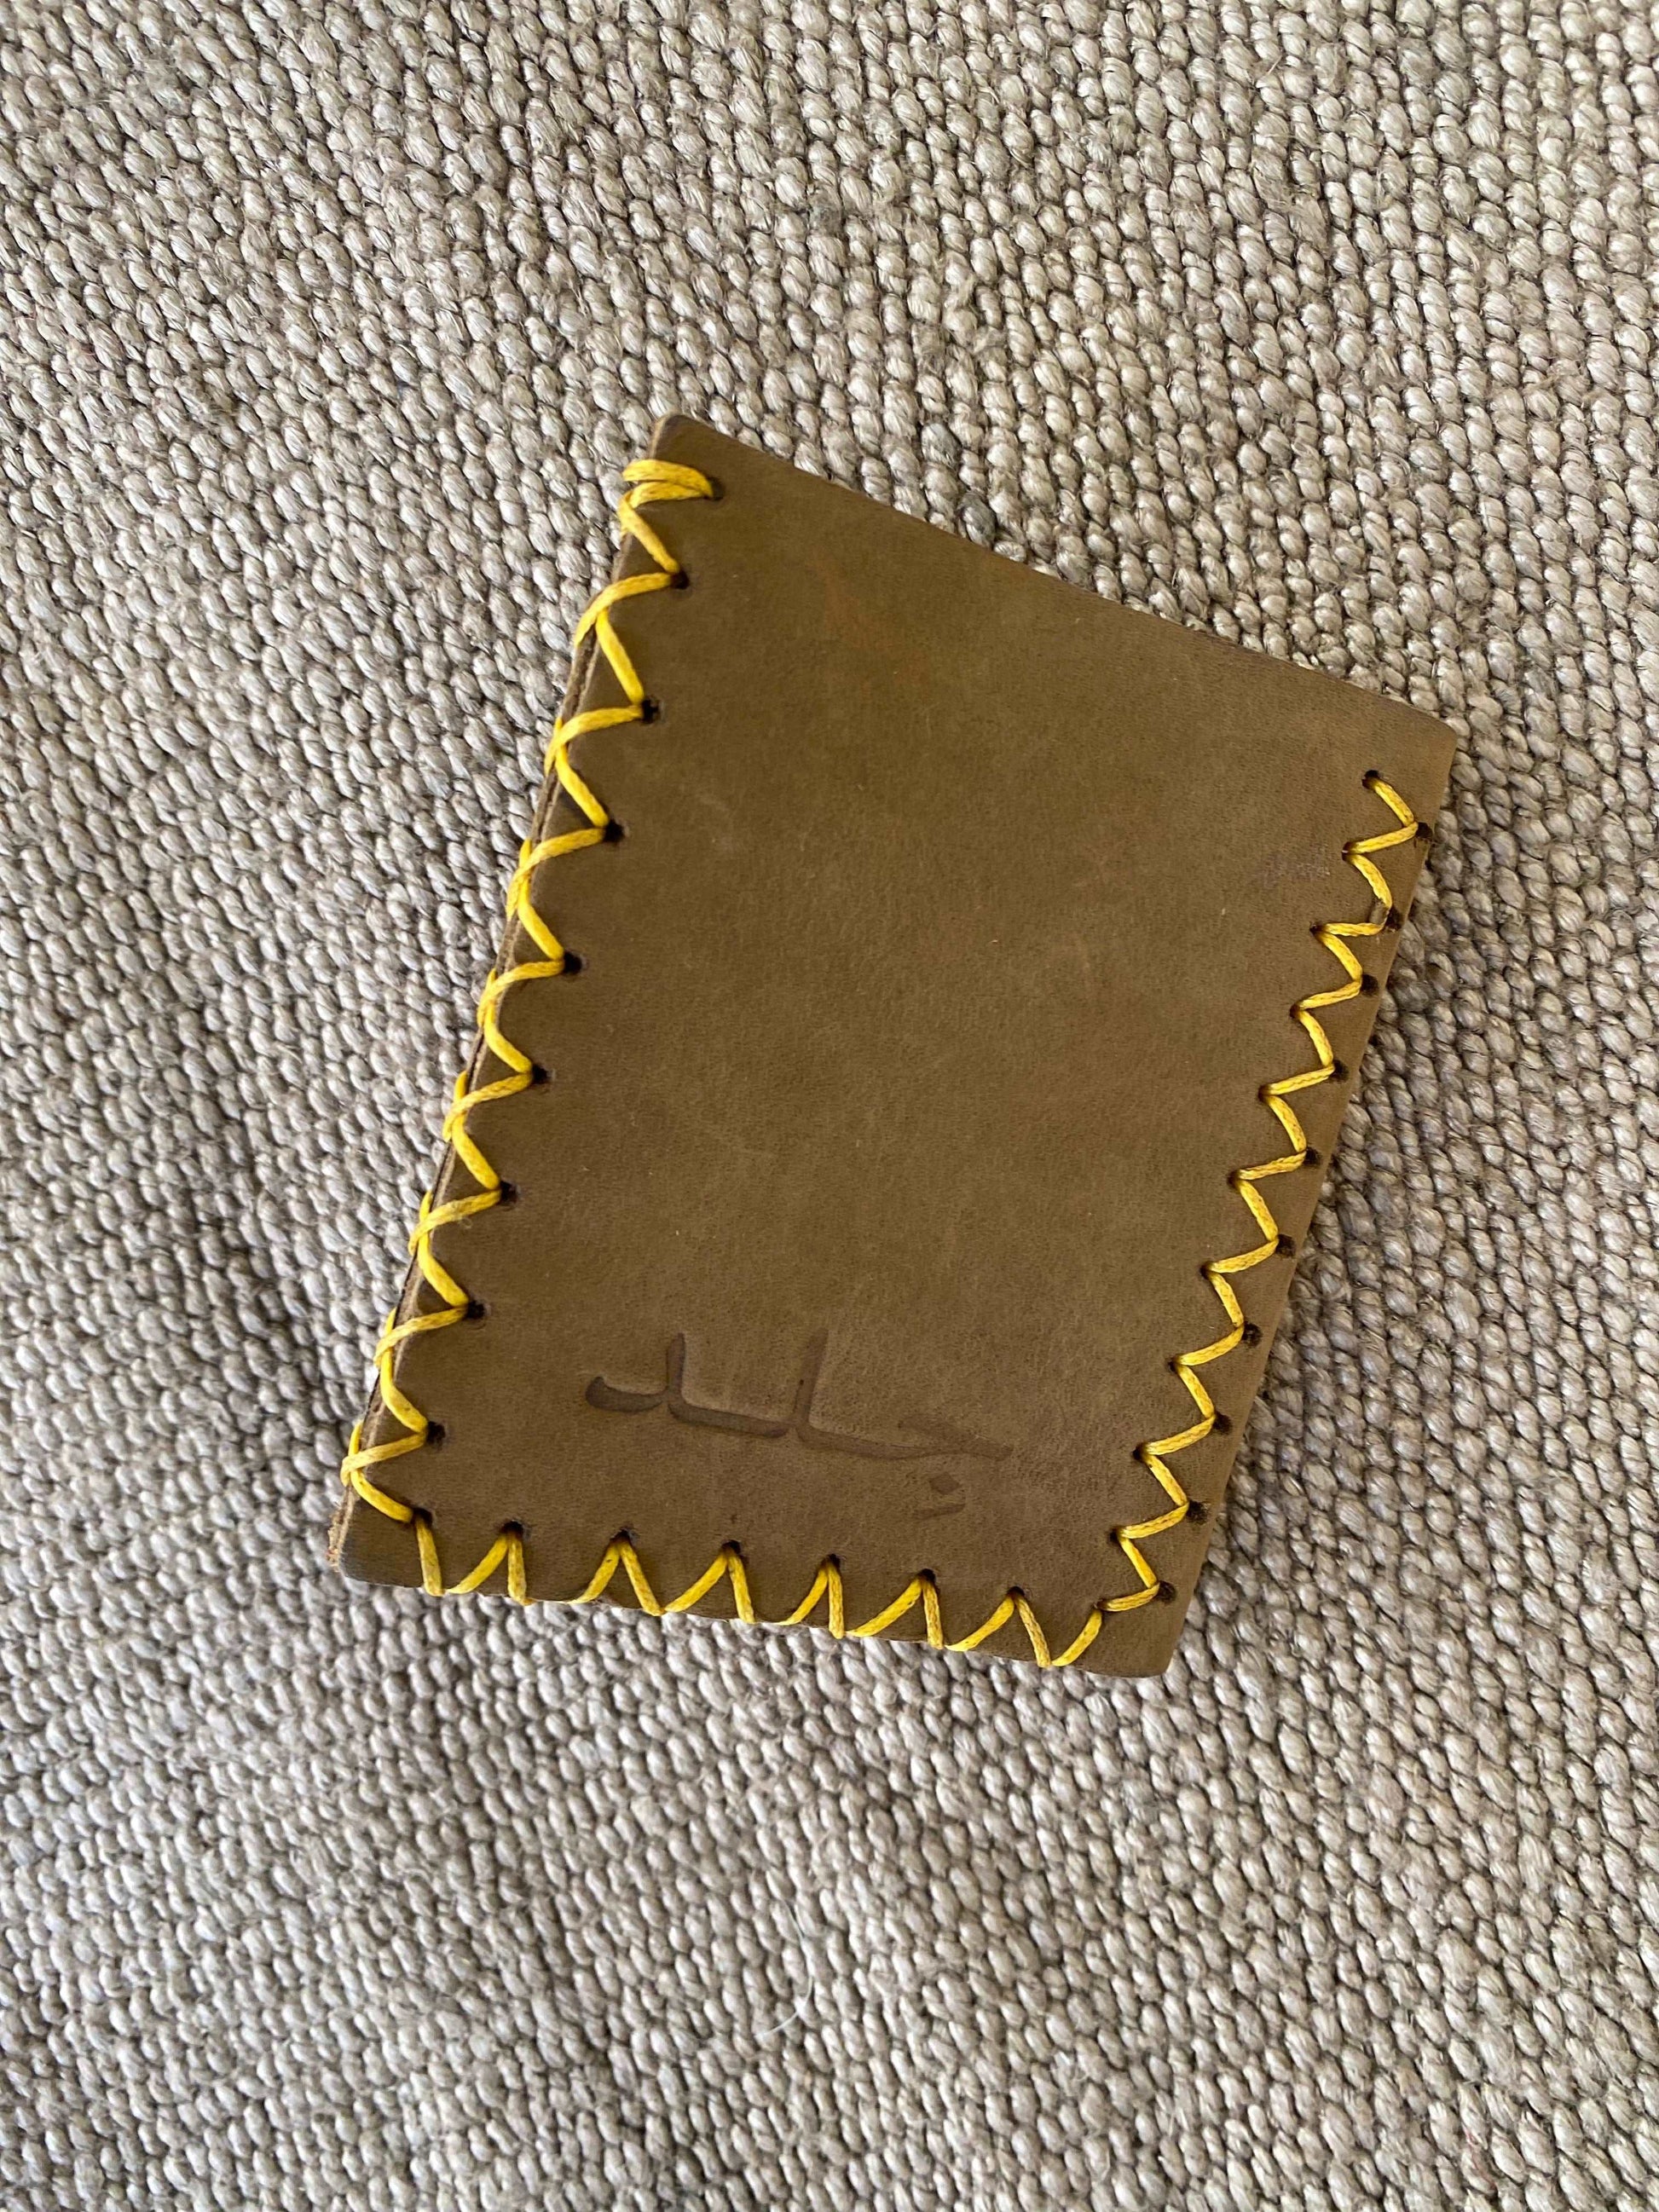 handmade-leather-wallet-jelld-palestine-hebron